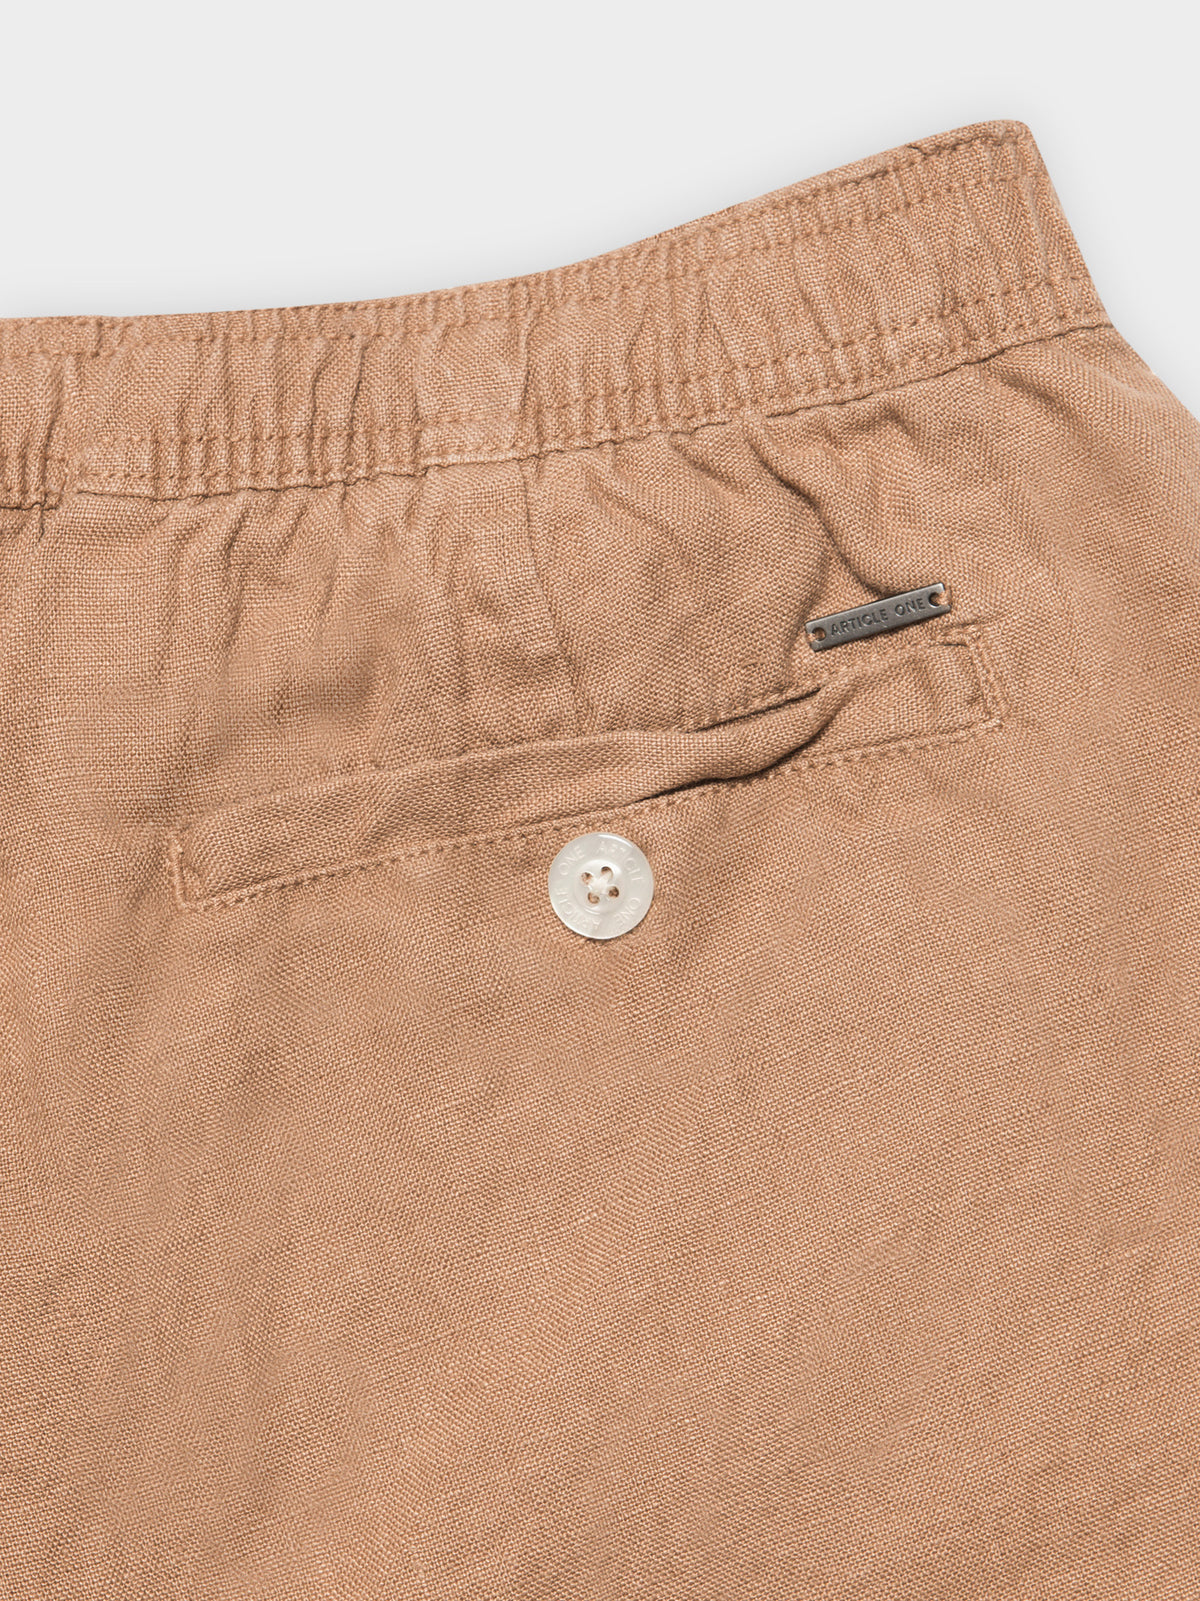 Nero Linen Shorts in Caramel